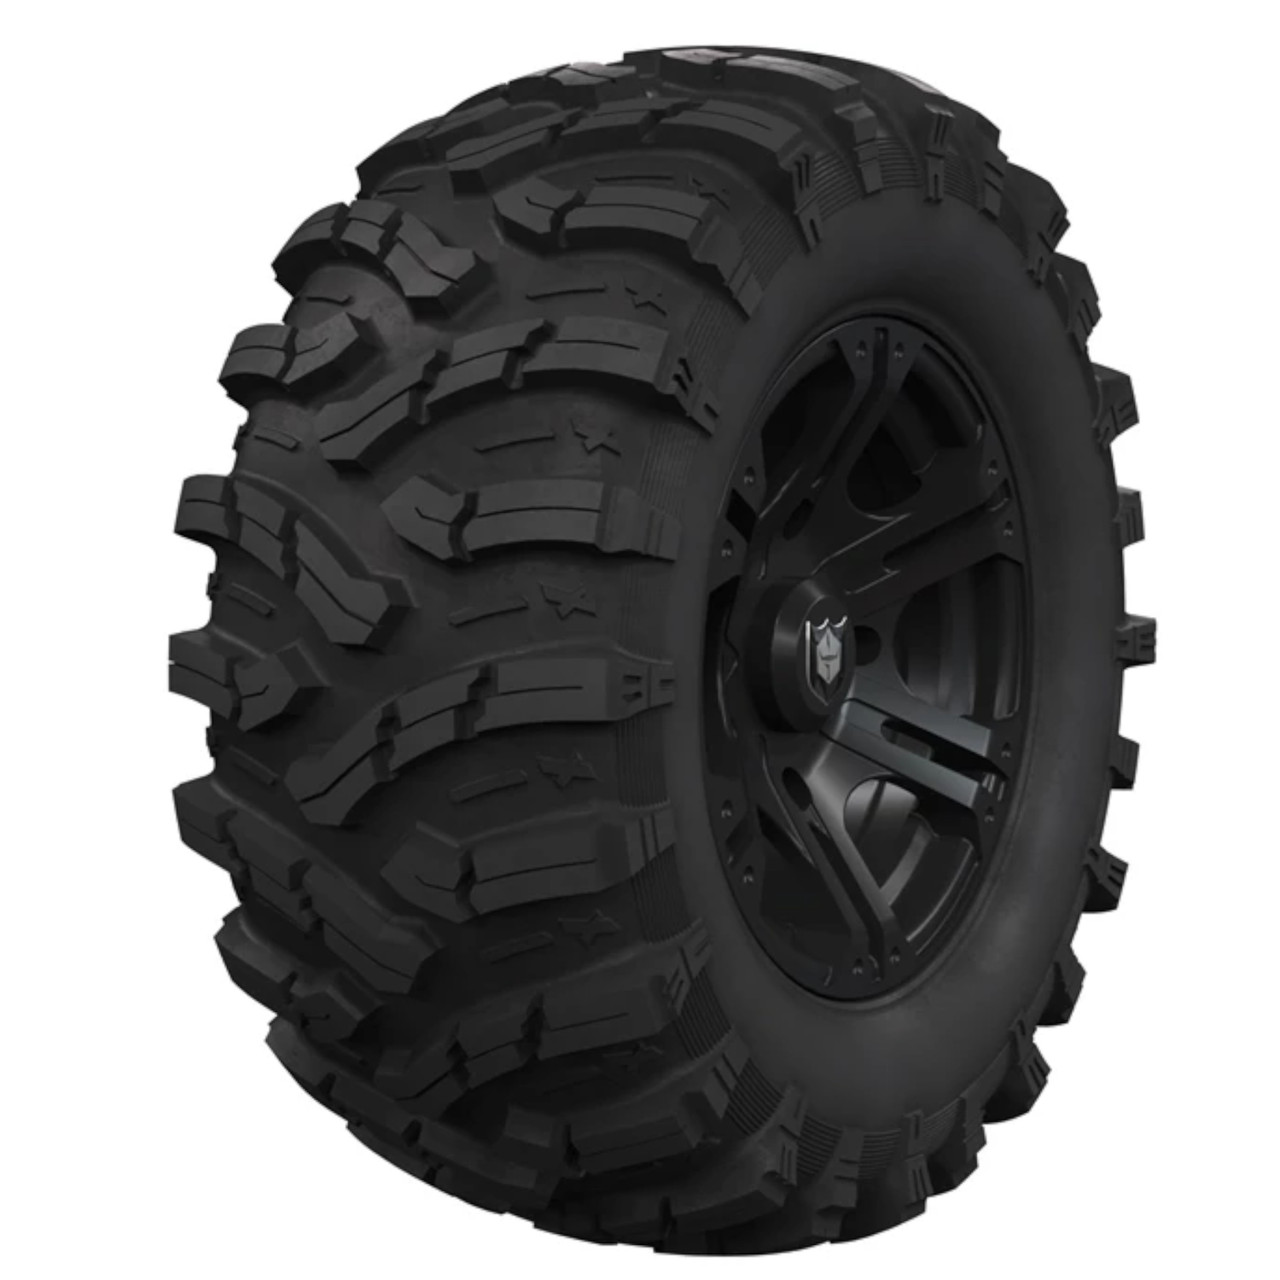 Polaris New OEM Pro Armor Wheel & Tire Set: X Terrain, 27 Inch Diameter, 2889975